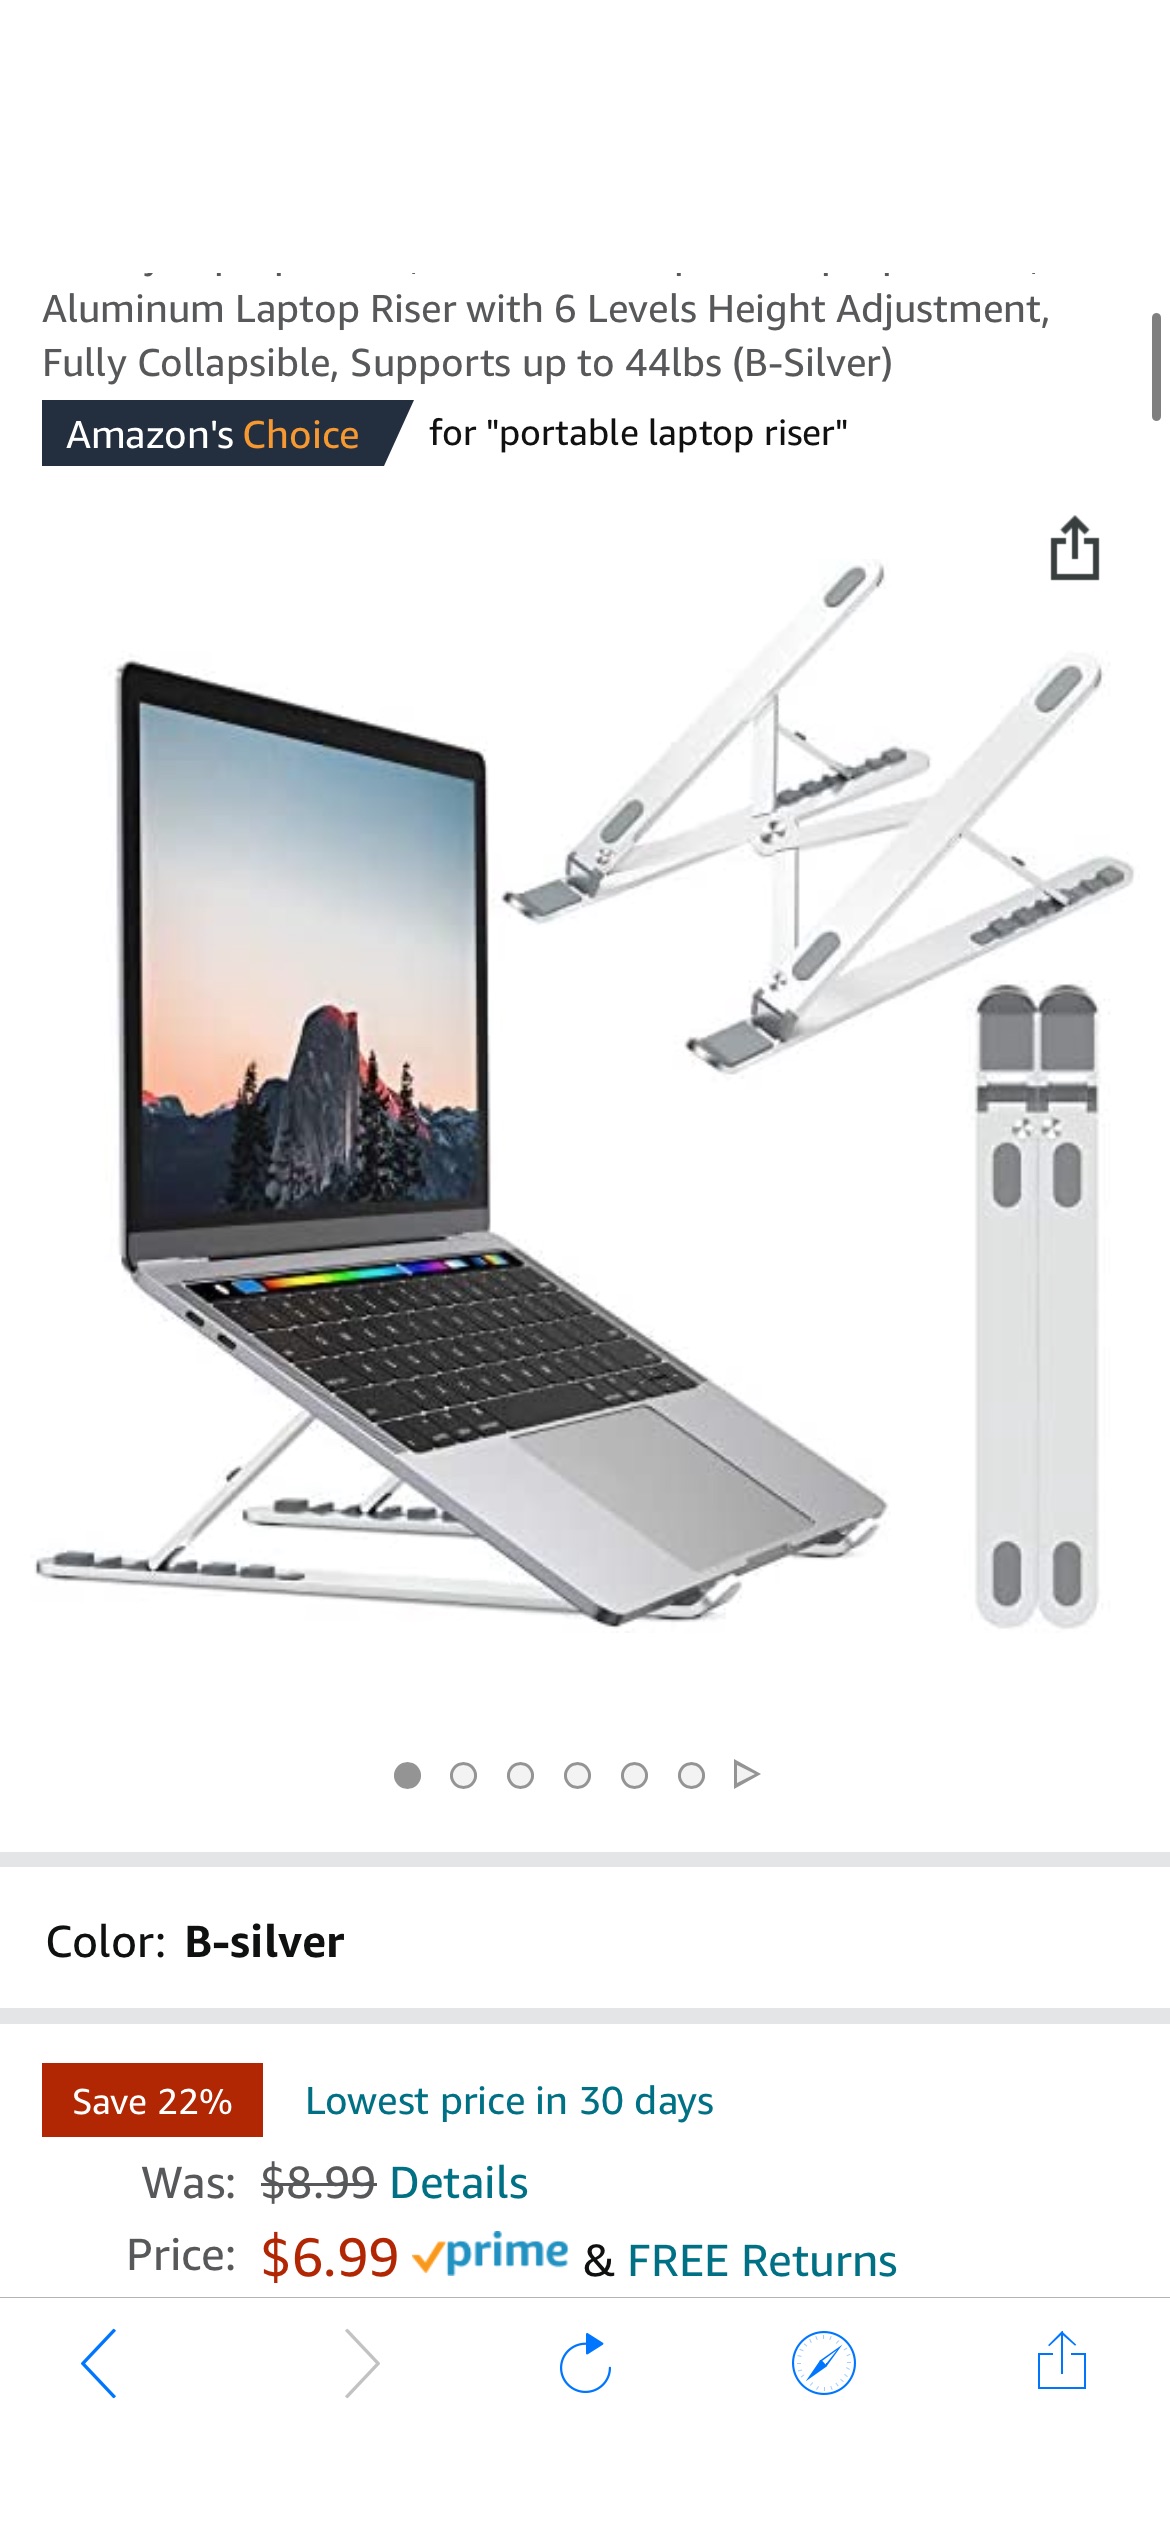 Amazon.com: Nulaxy Laptop Stand, Portable Computer Laptop Mount, Aluminum Laptop Riser with 6 Levels电脑架